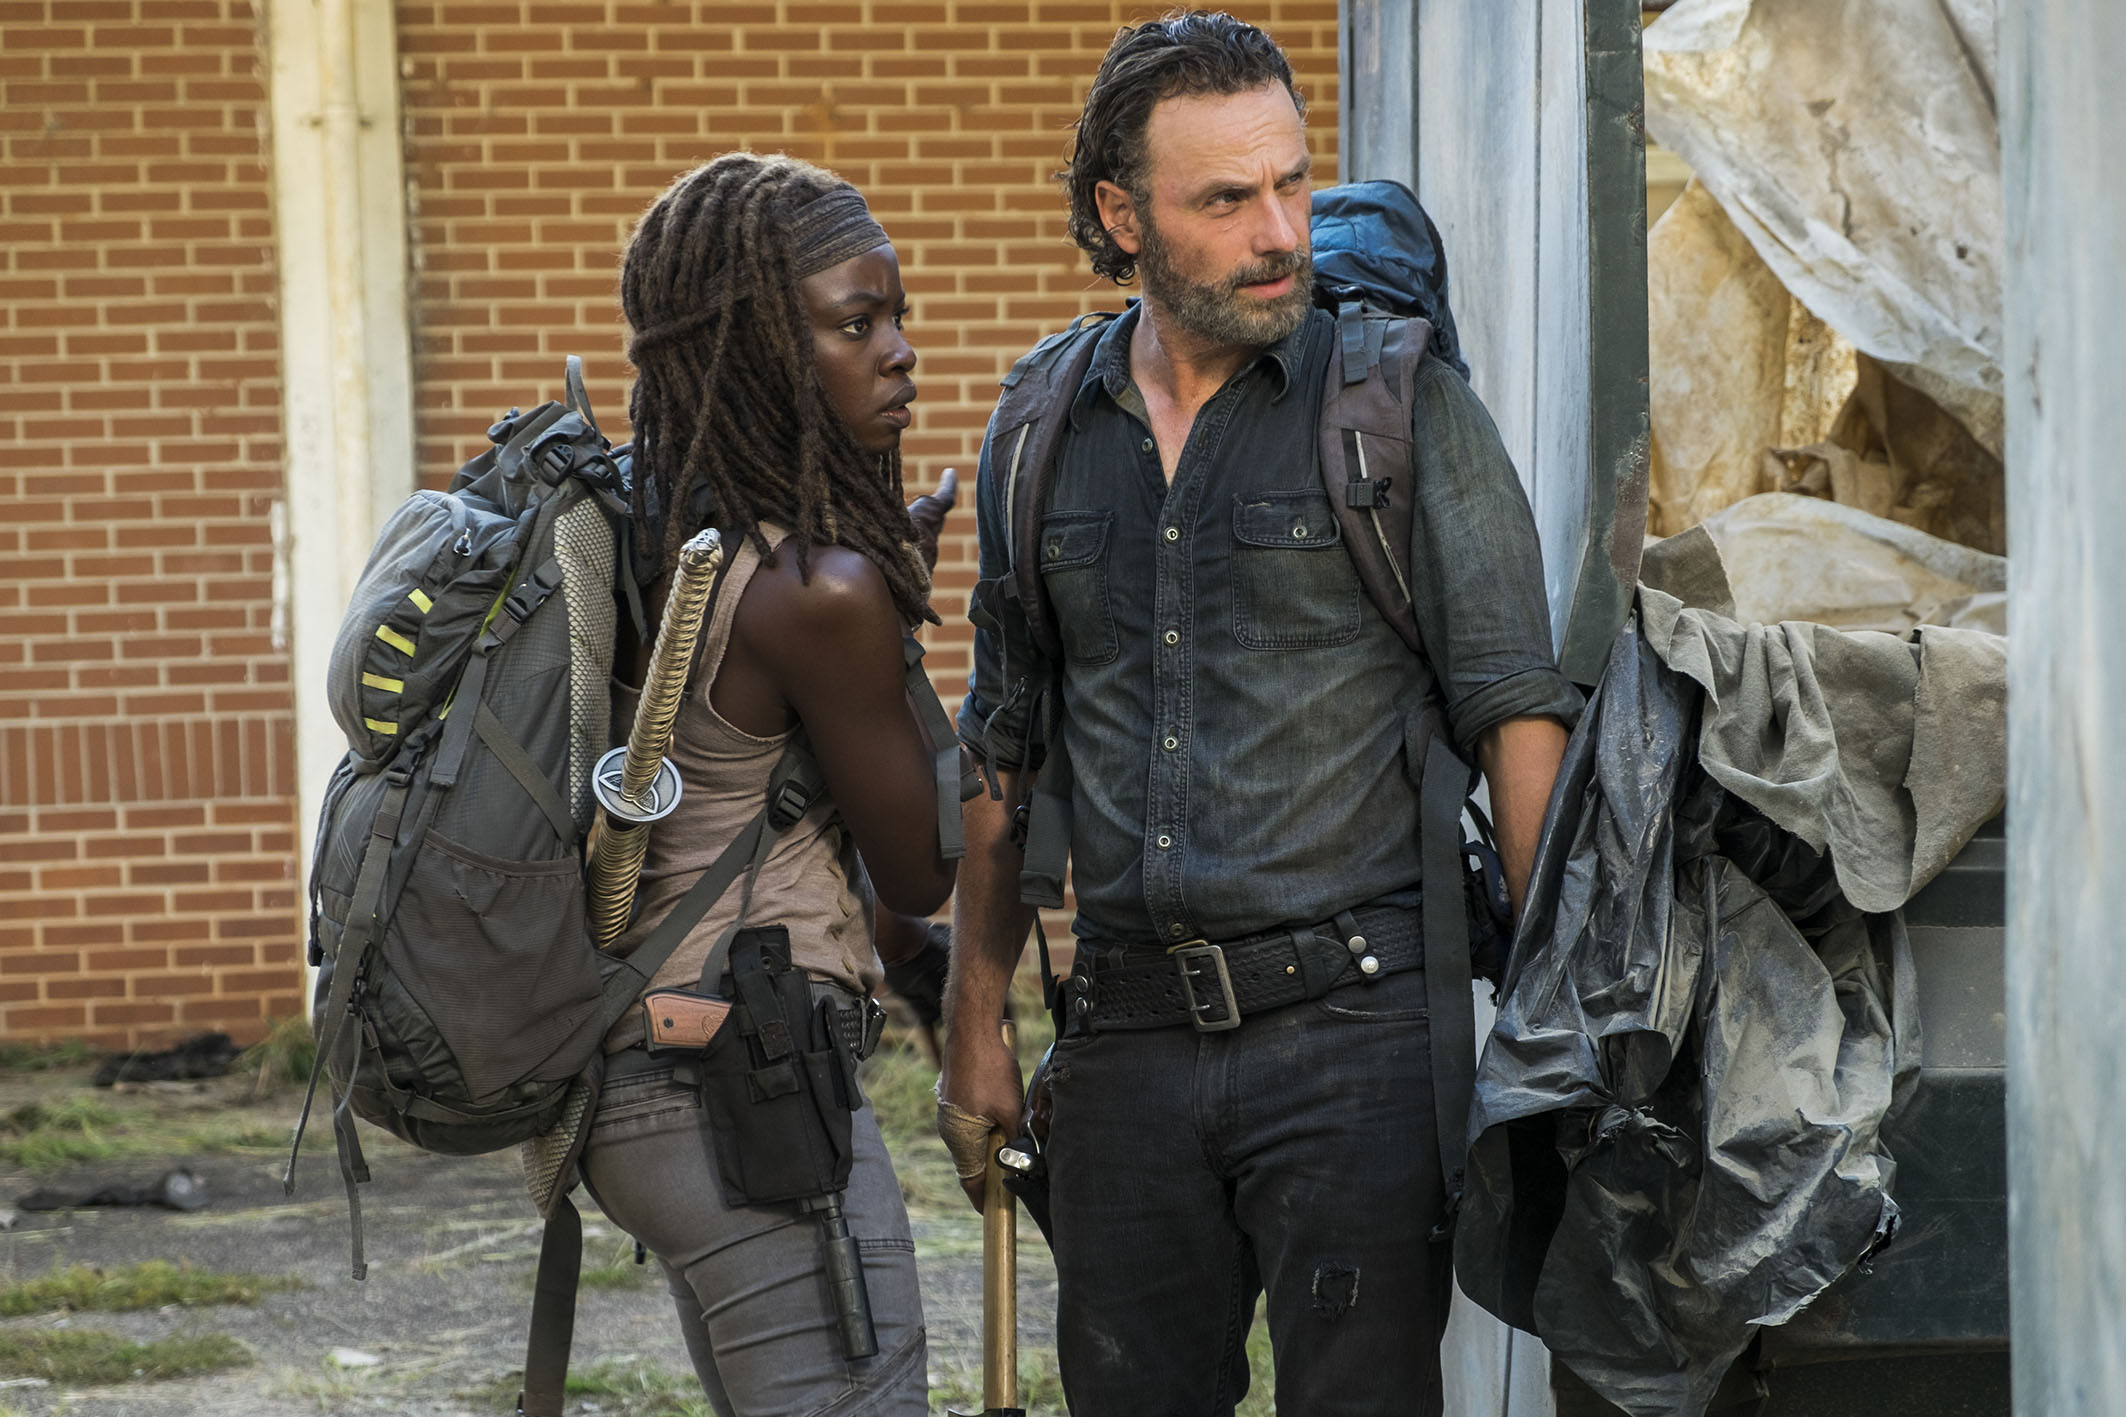 Walking Dead Season 7 Episode 12 ‘Say Yes’ review